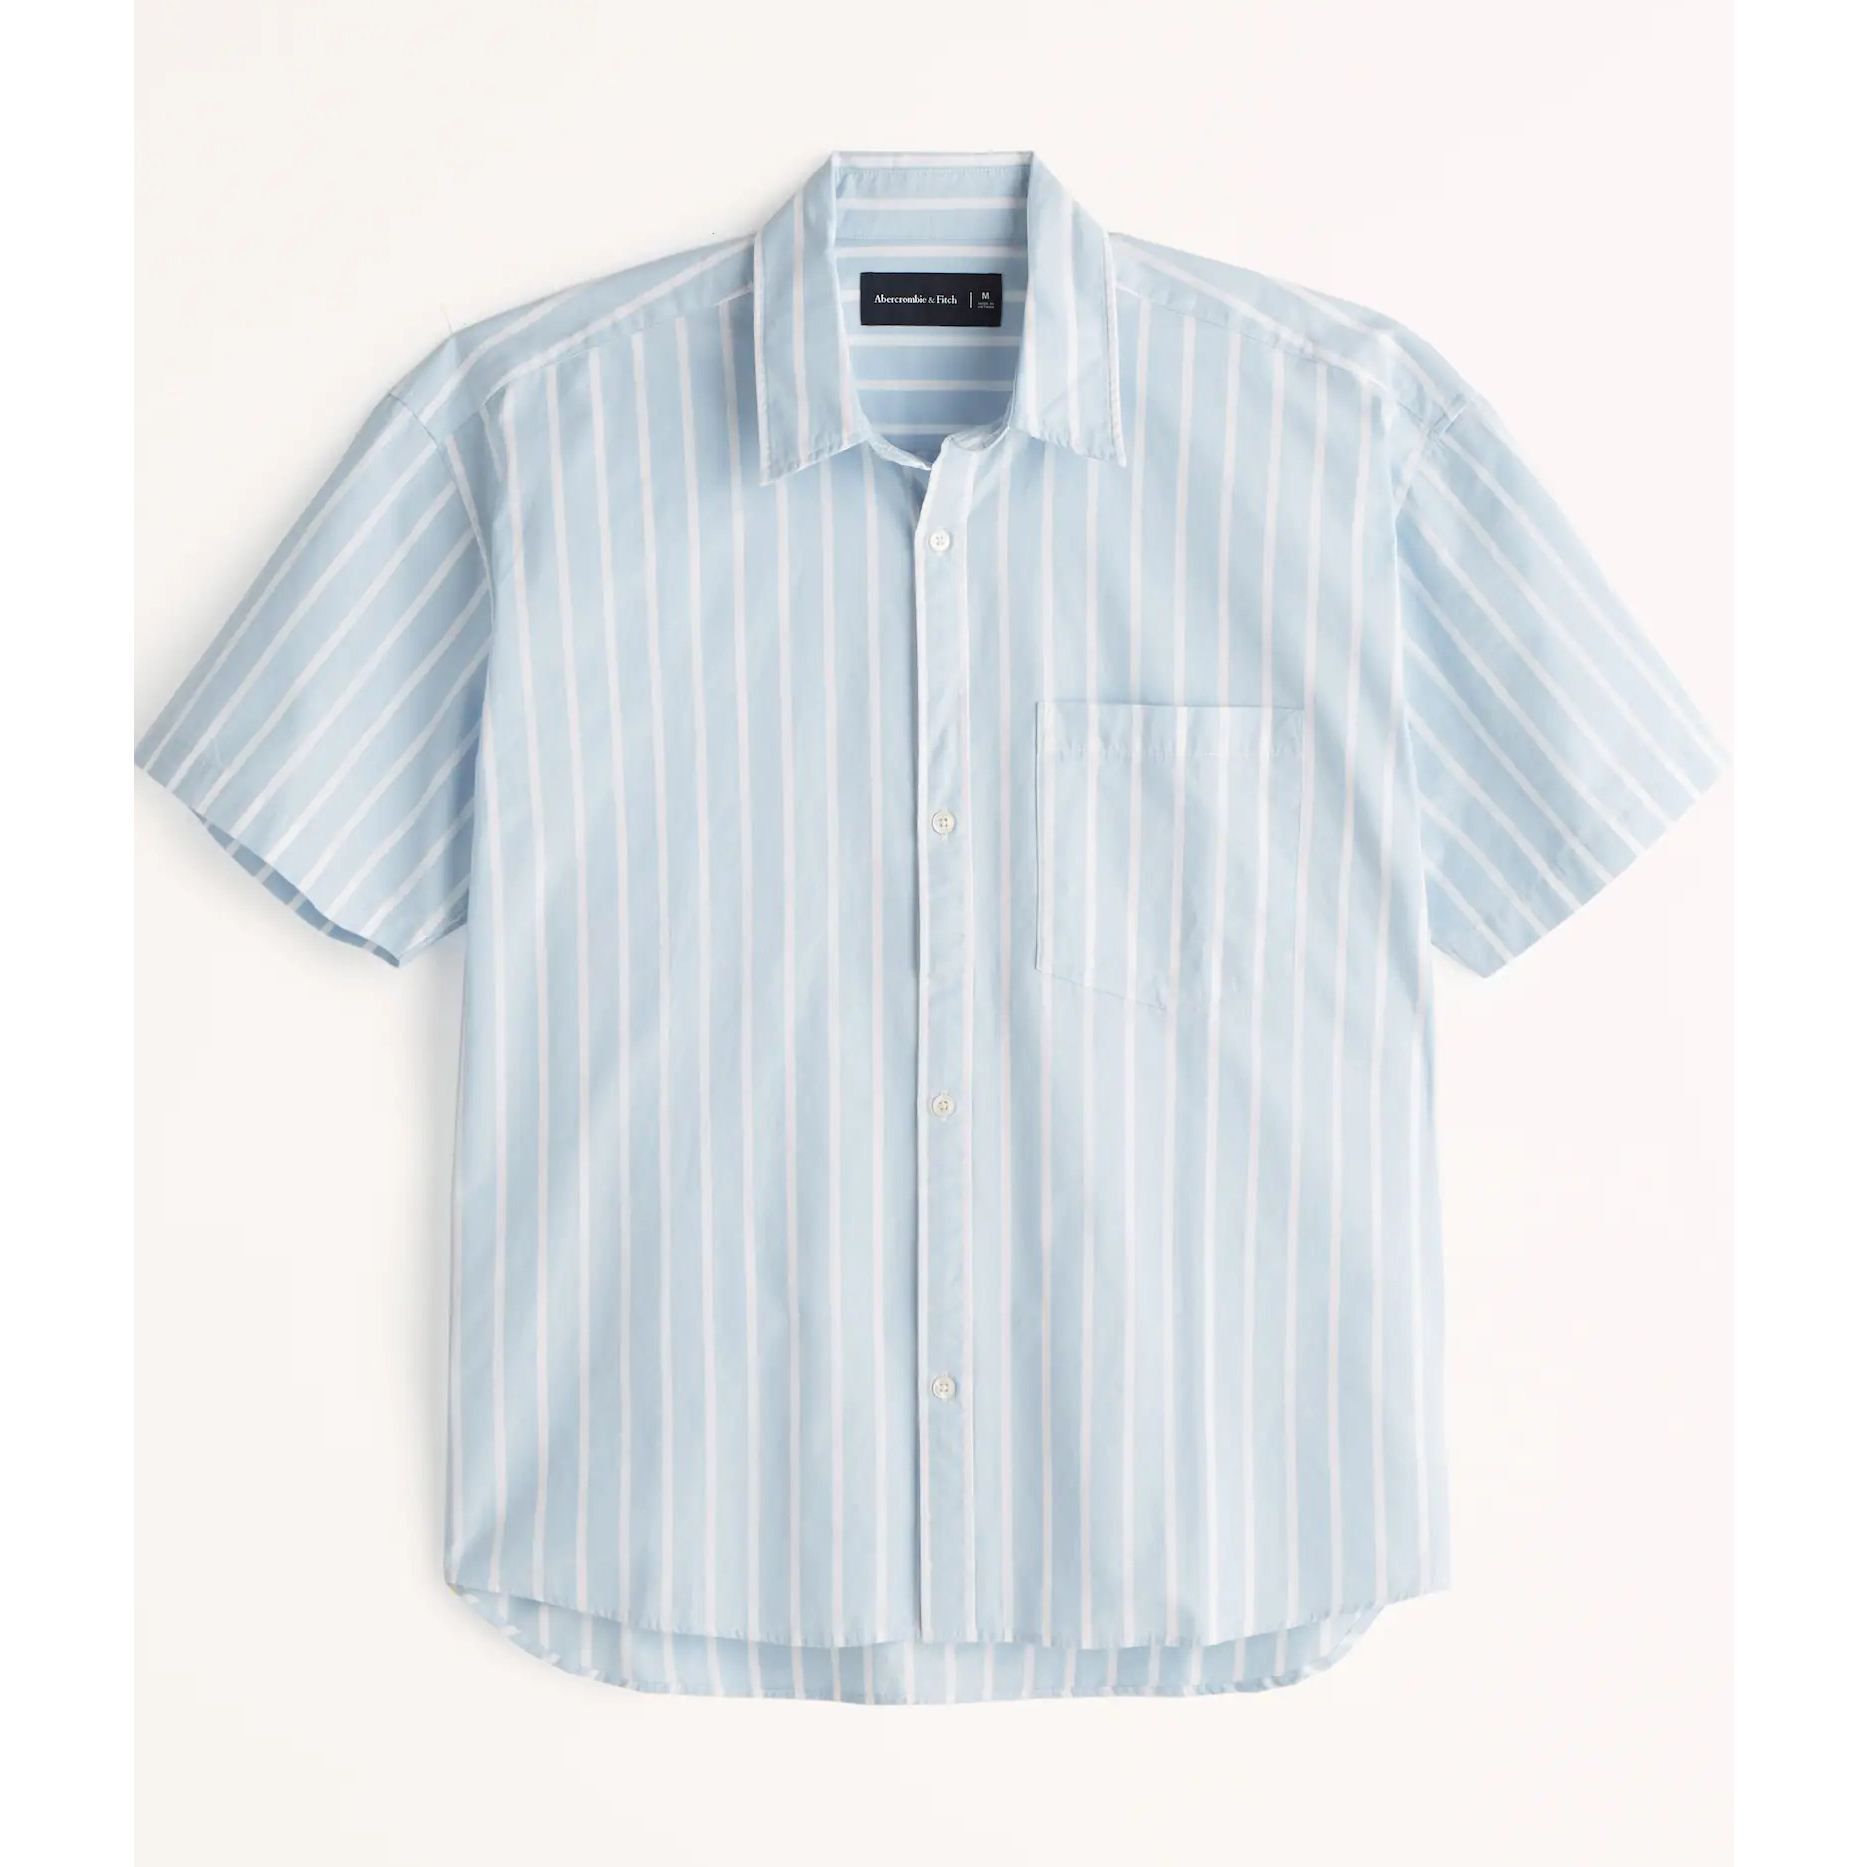 Daopwlkom Mens Cotton Short Sleeve Shirts Summer Casual Button Down Lightweight Beach Plain T Shirt Breathable Top Blouse 